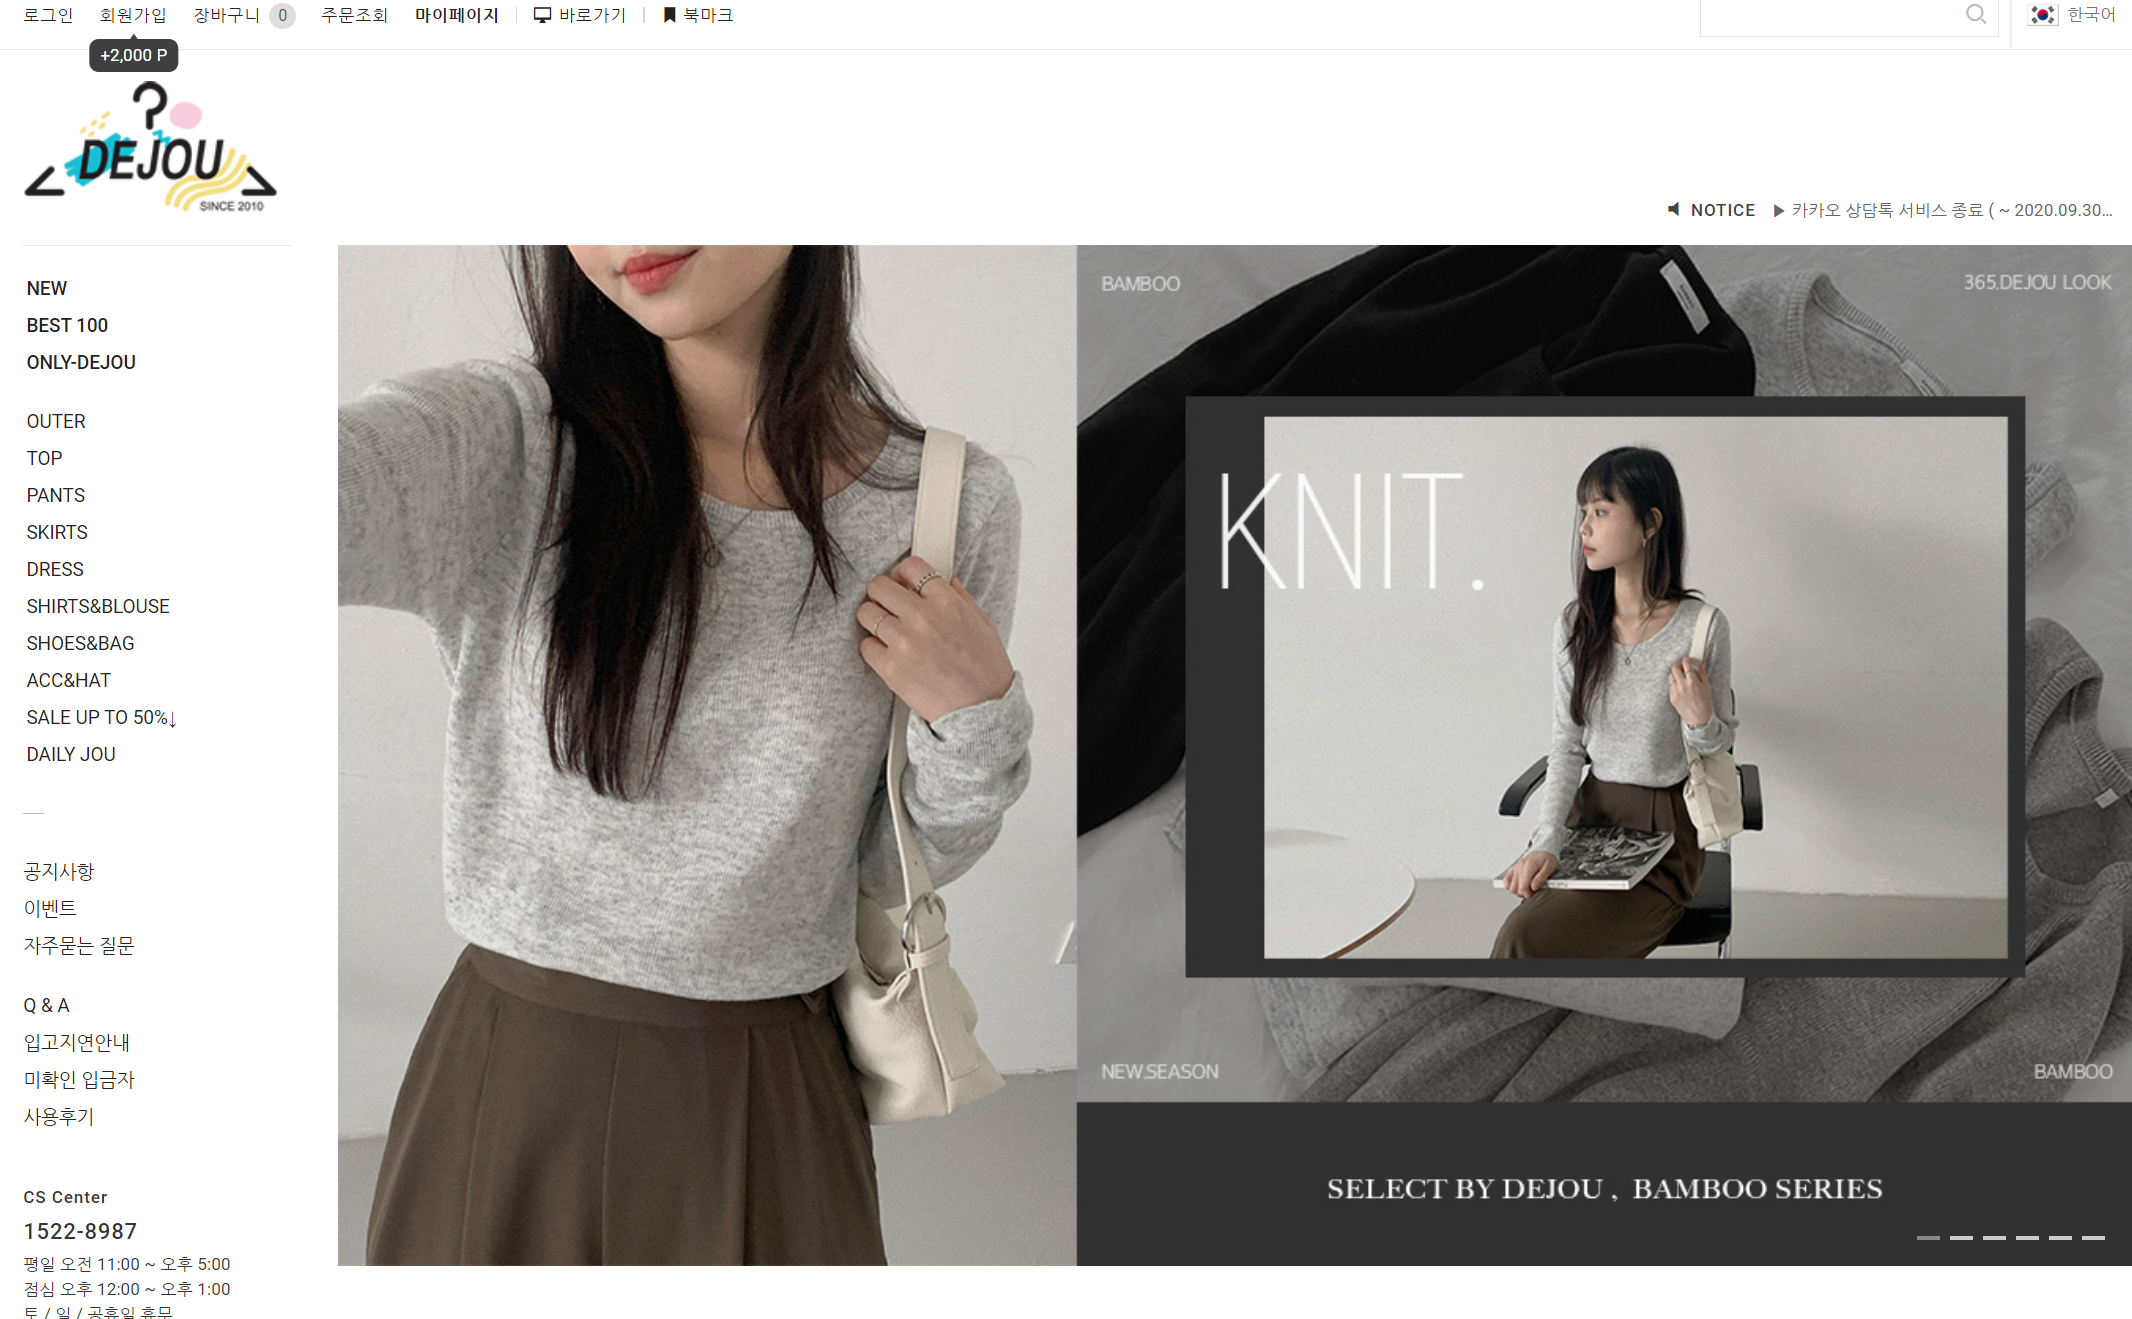 dejou - korea fashion online shop